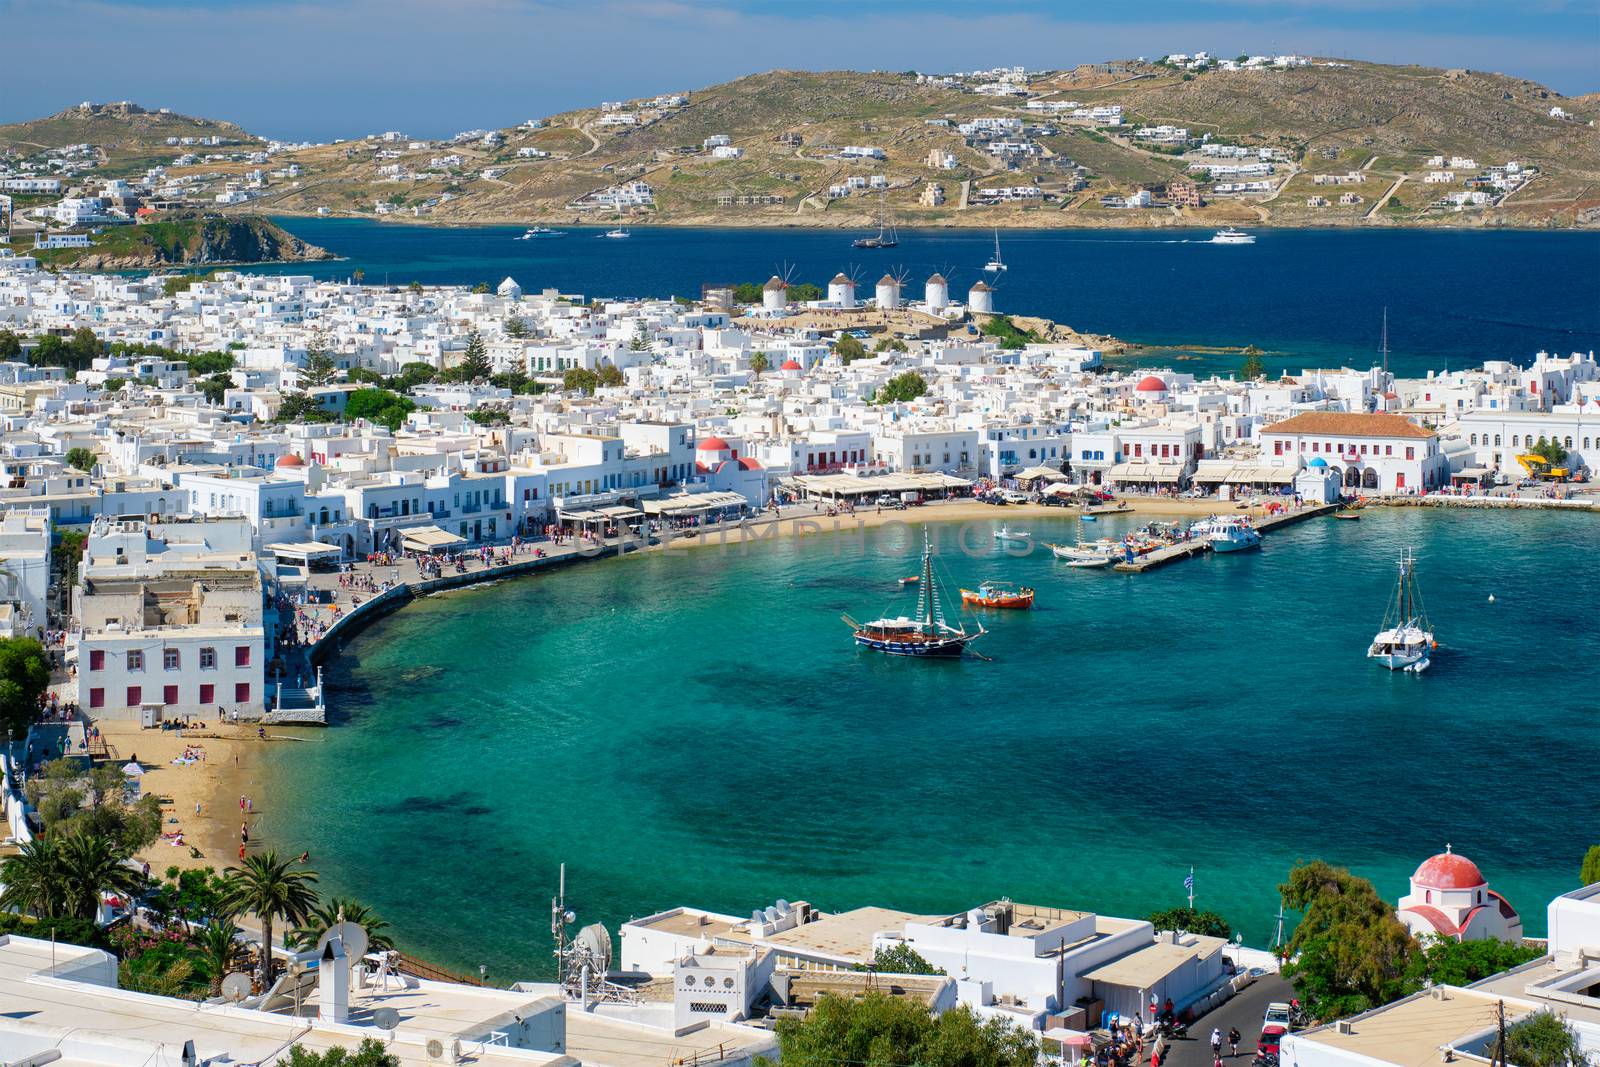 Mykonos island port with boats, Cyclades islands, Greece by dimol